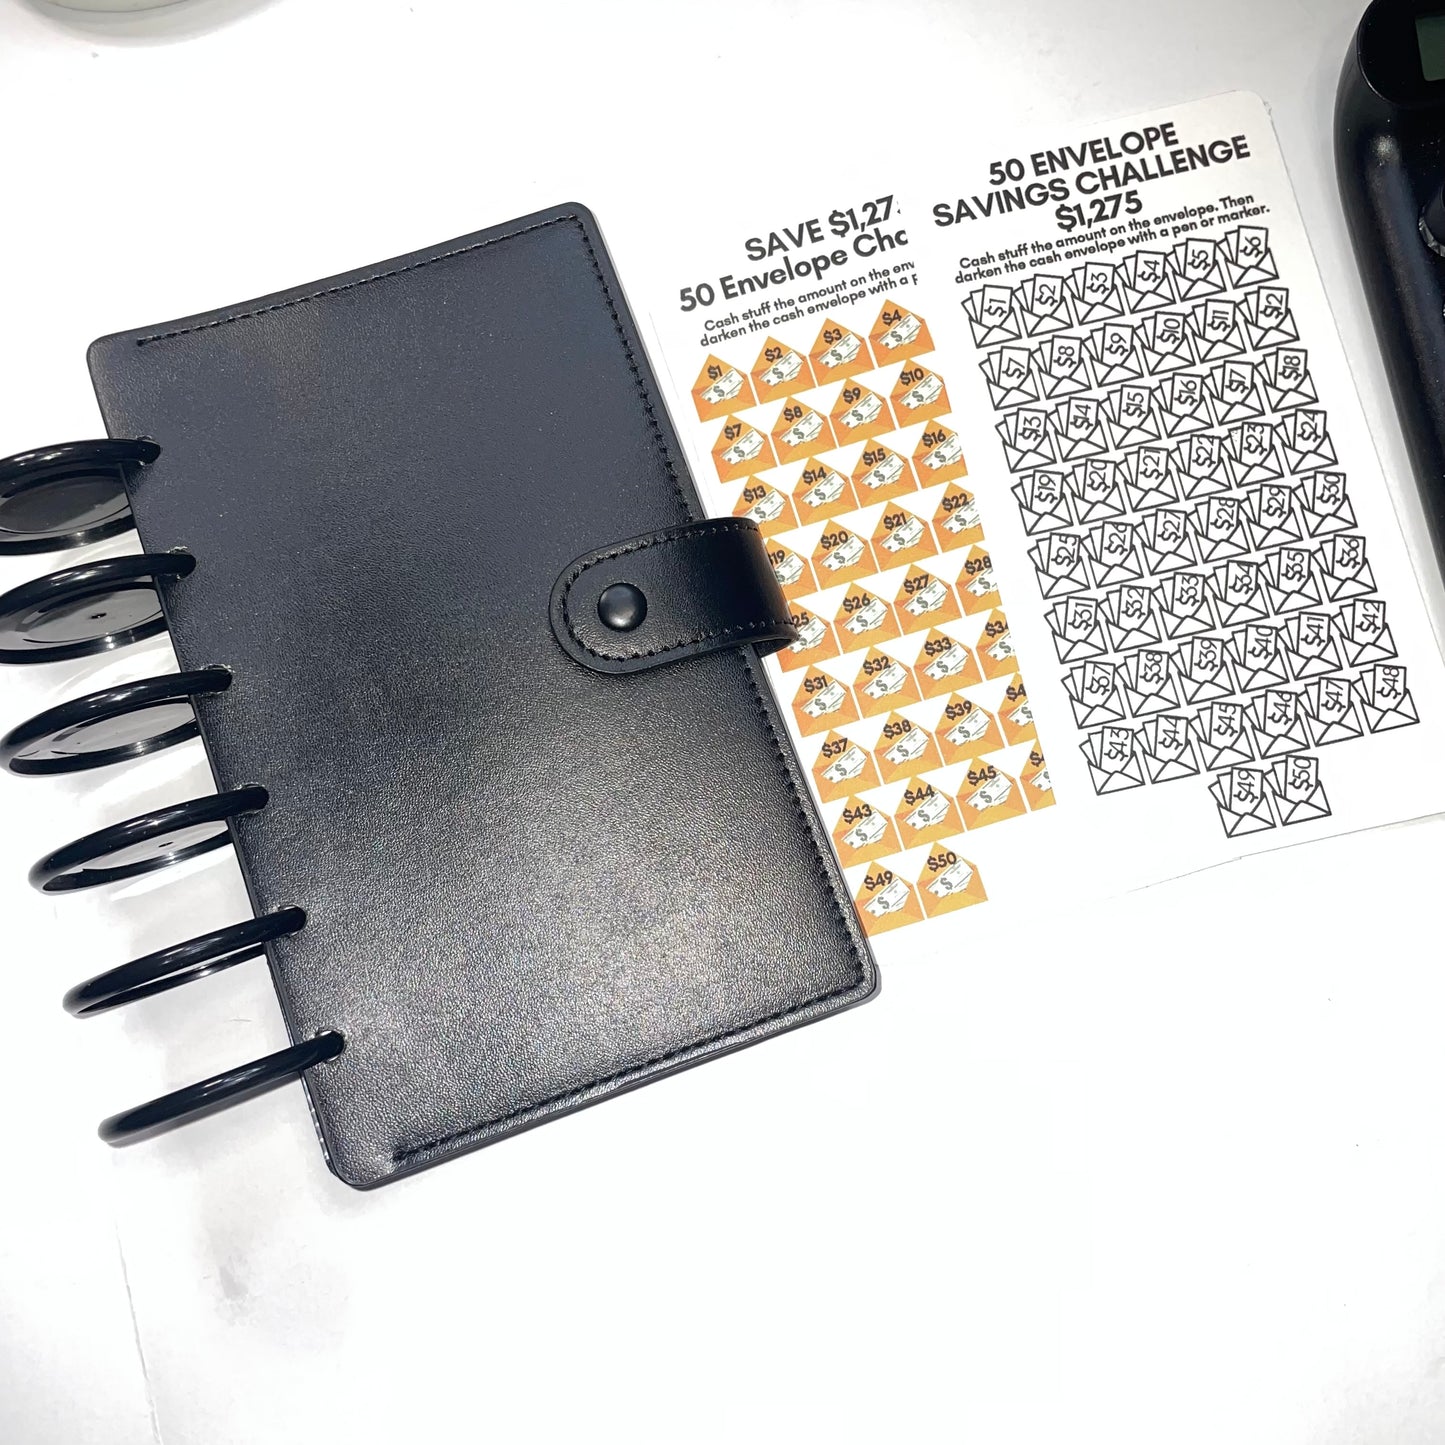 Budget System | 50 Cash Envelopes System | Organizer | Smooth Black Leather Discbound